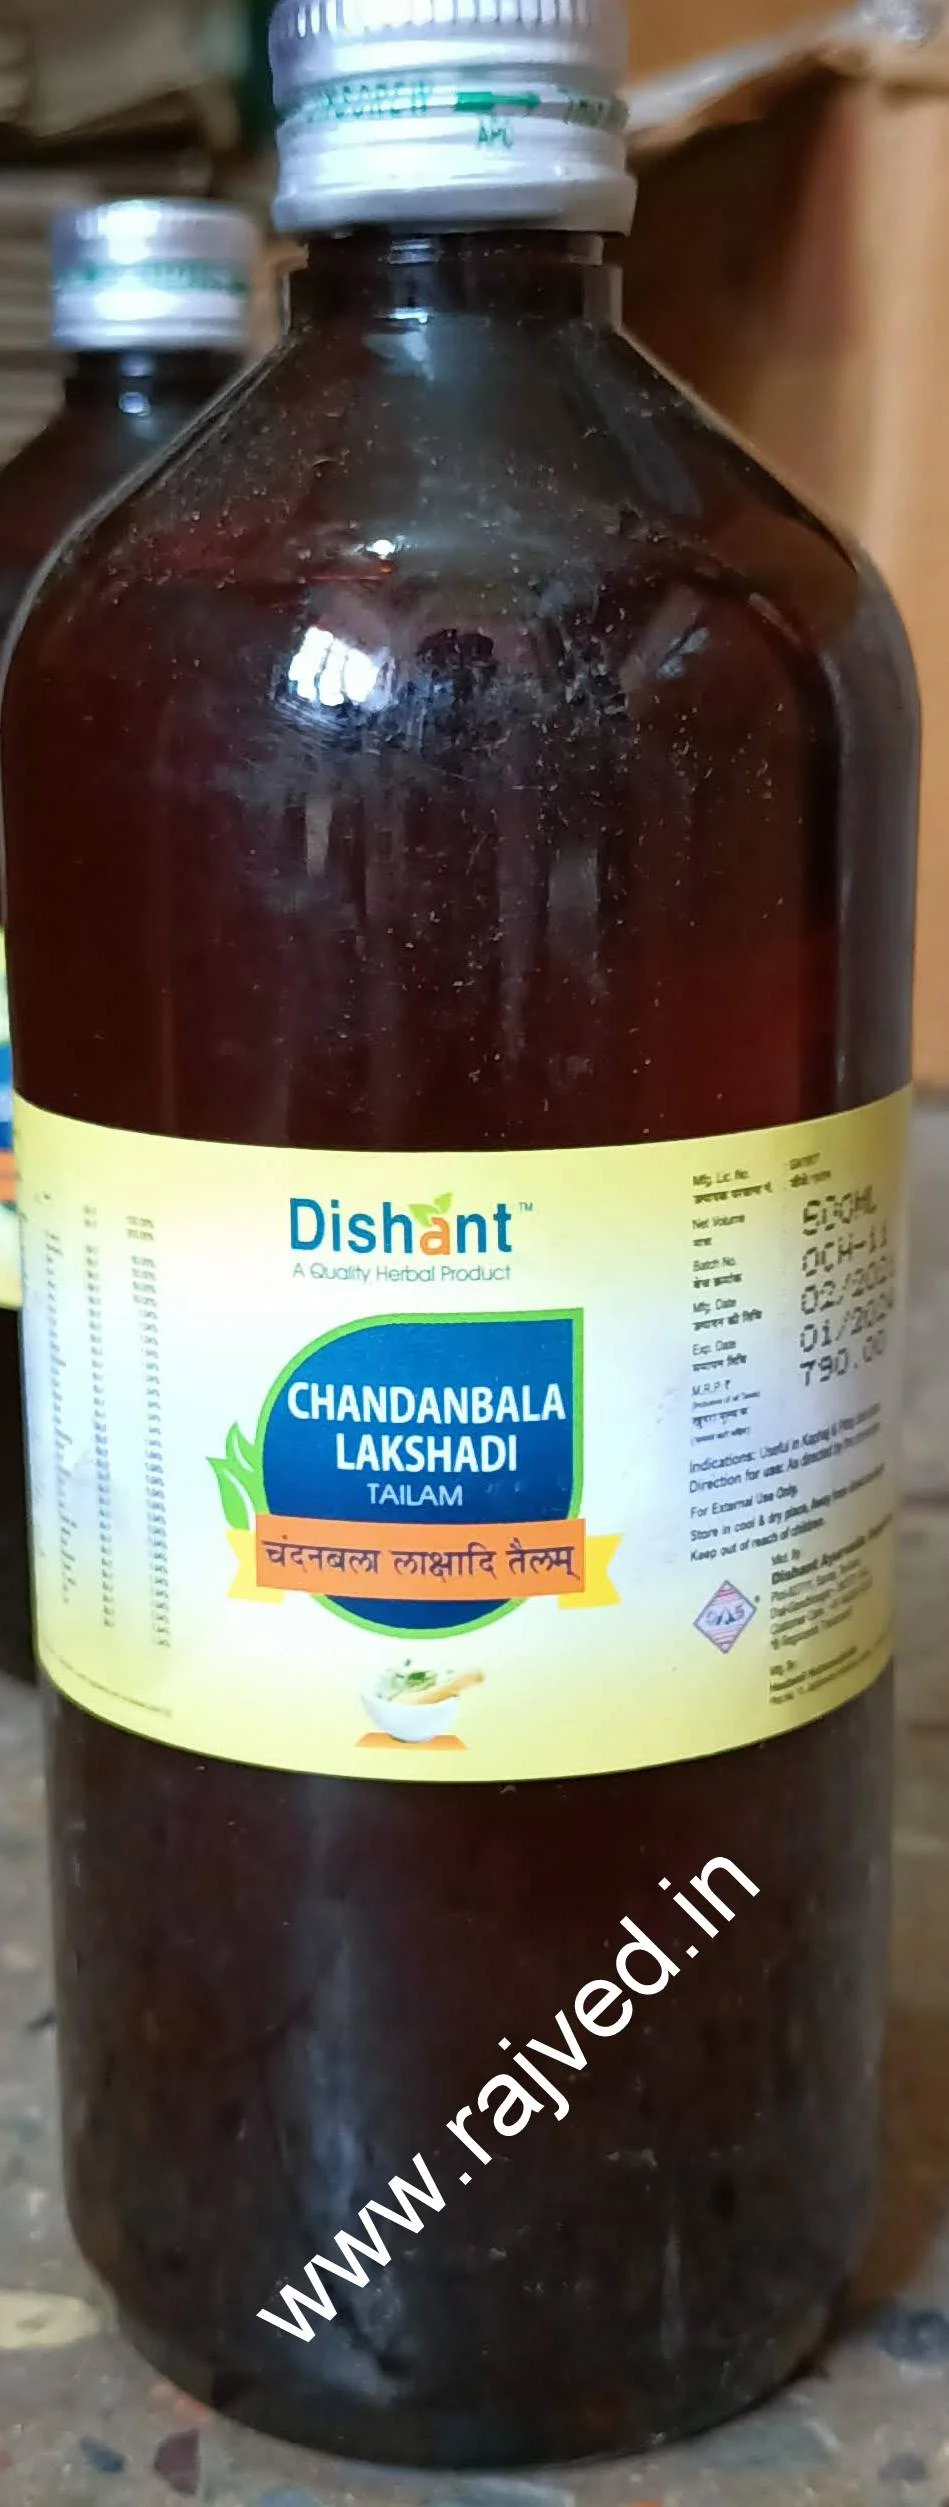 chandanbala lakshadi tailam 1000 ml dishant ayurvedic suppliers